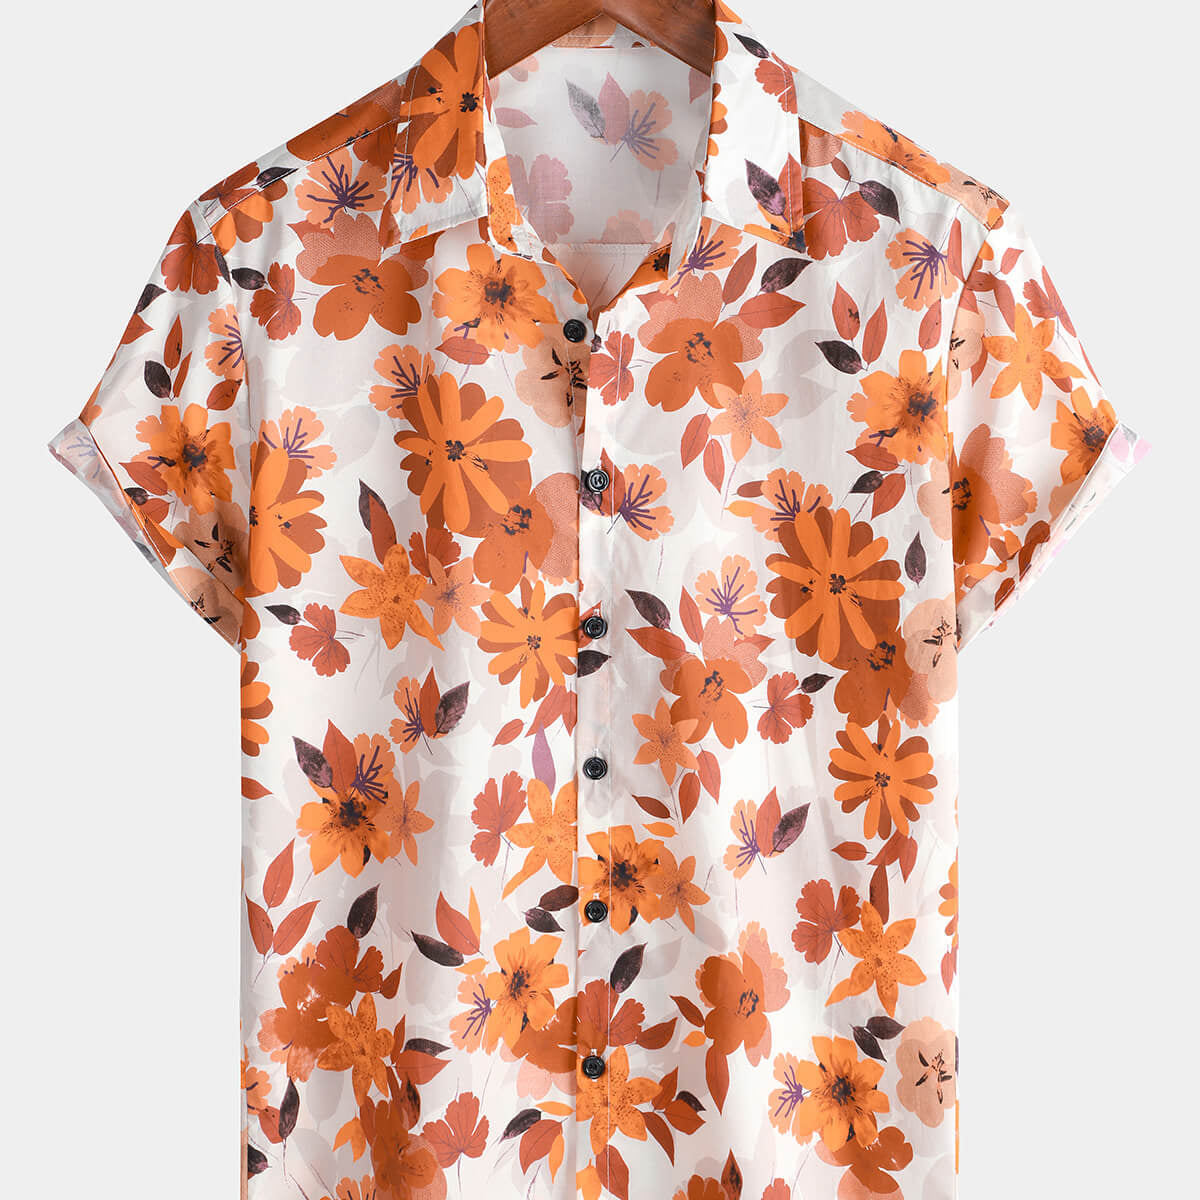 Men's Orange Floral Button Up Casual Short Sleeve Shirt